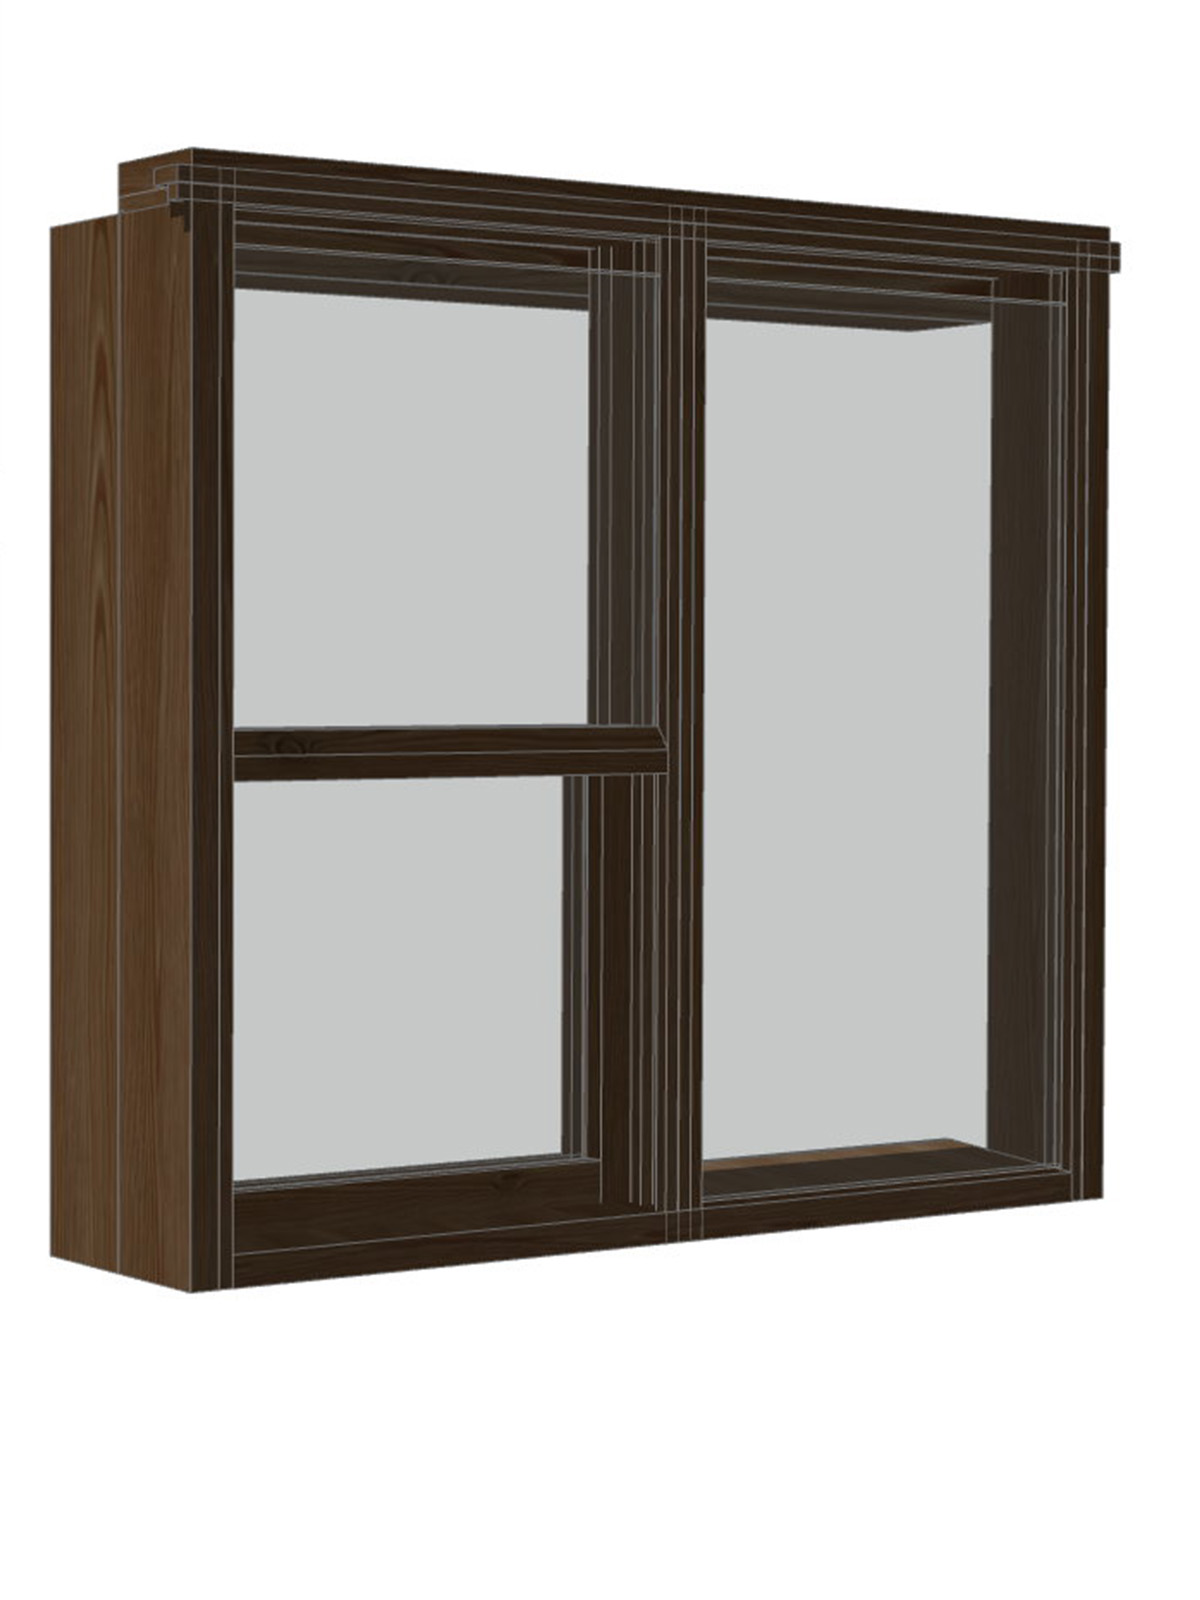 Holzskelettbau - Fenster aus CAD 